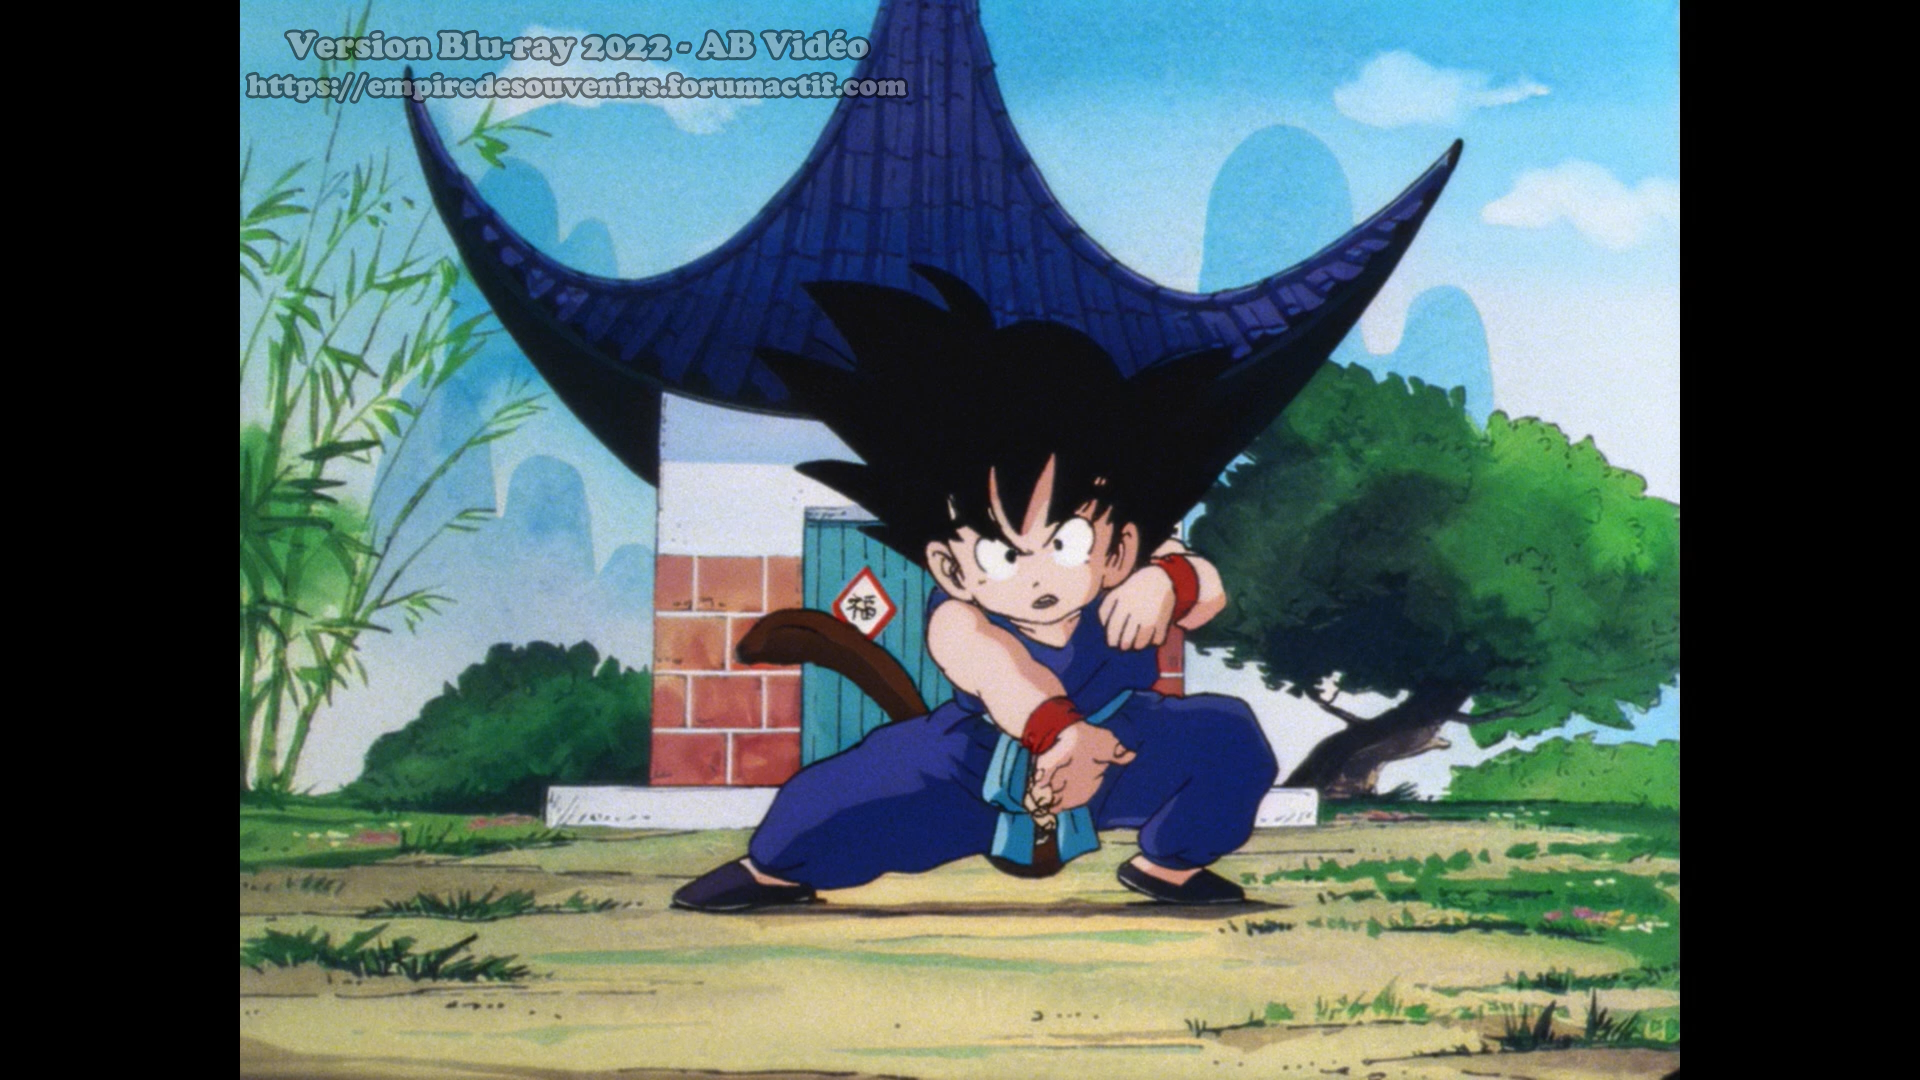 Anime Dragon Ball Z Completo em Blu Ray 1080p